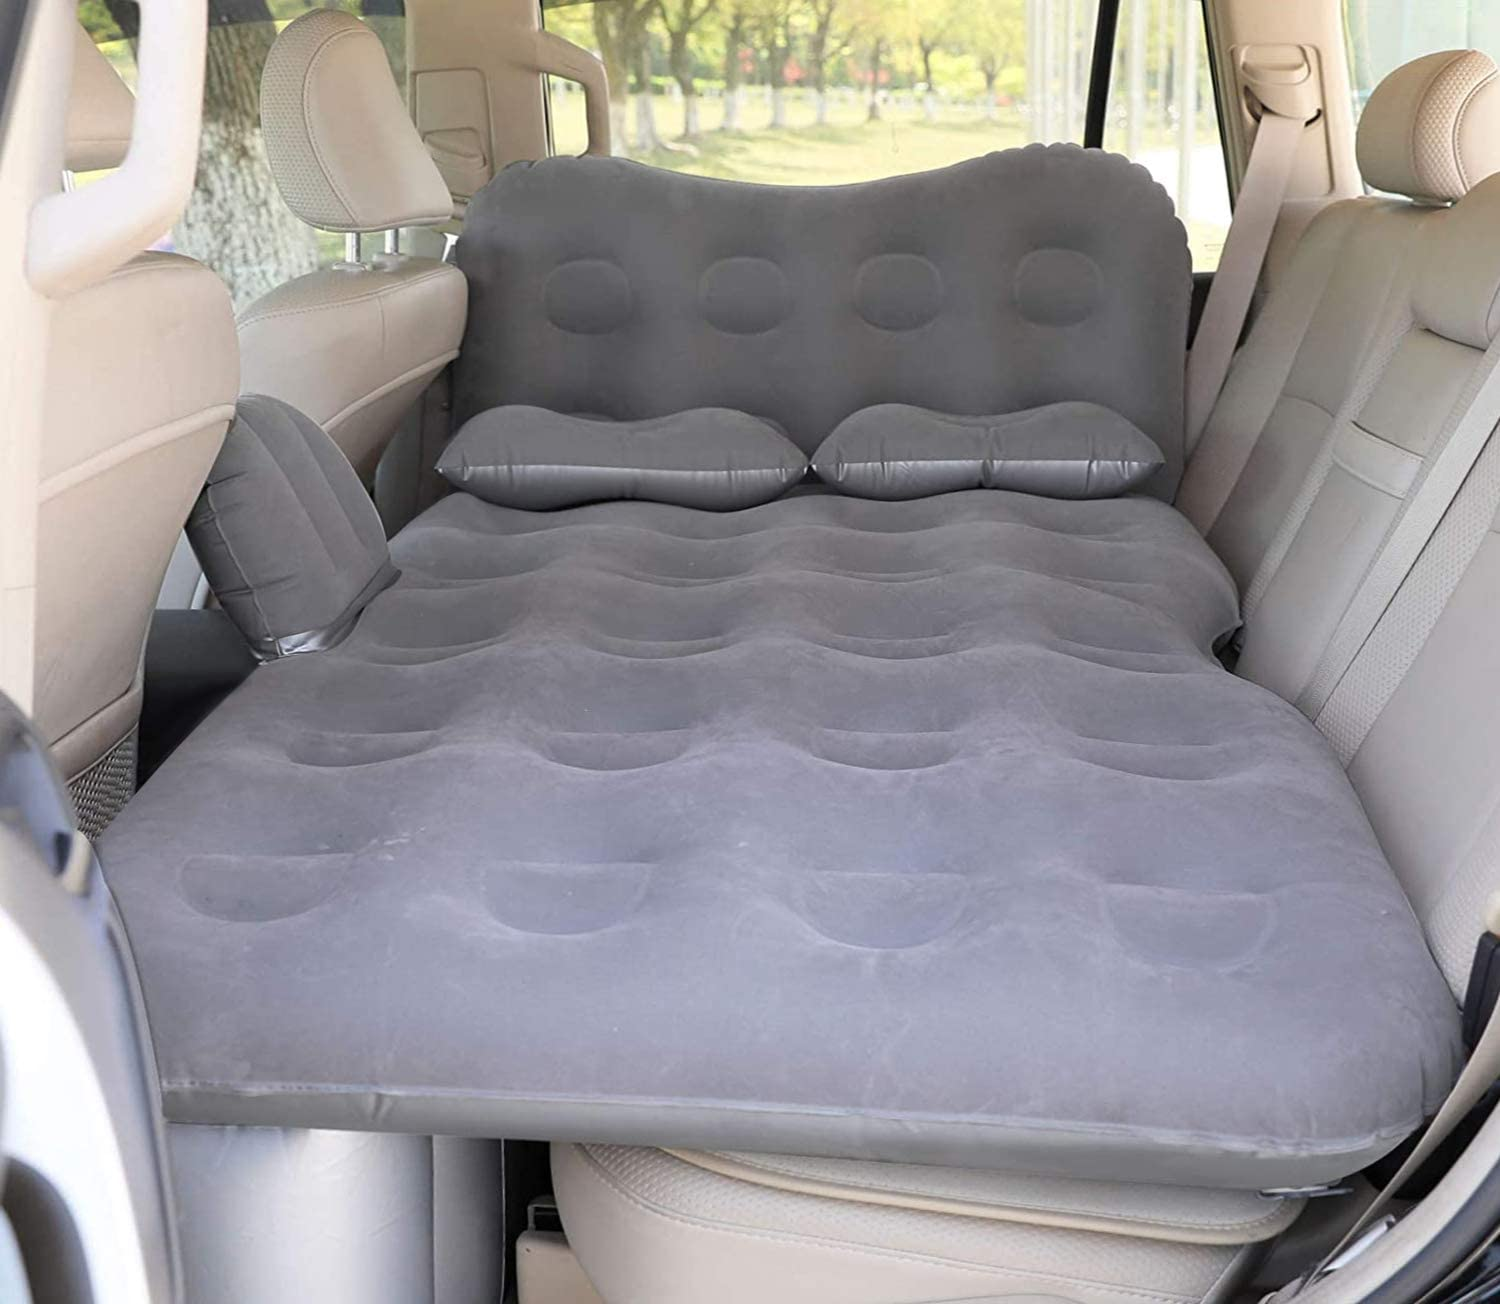 Car Backseat Travel Pillow Washable Sleeping Pillow Children